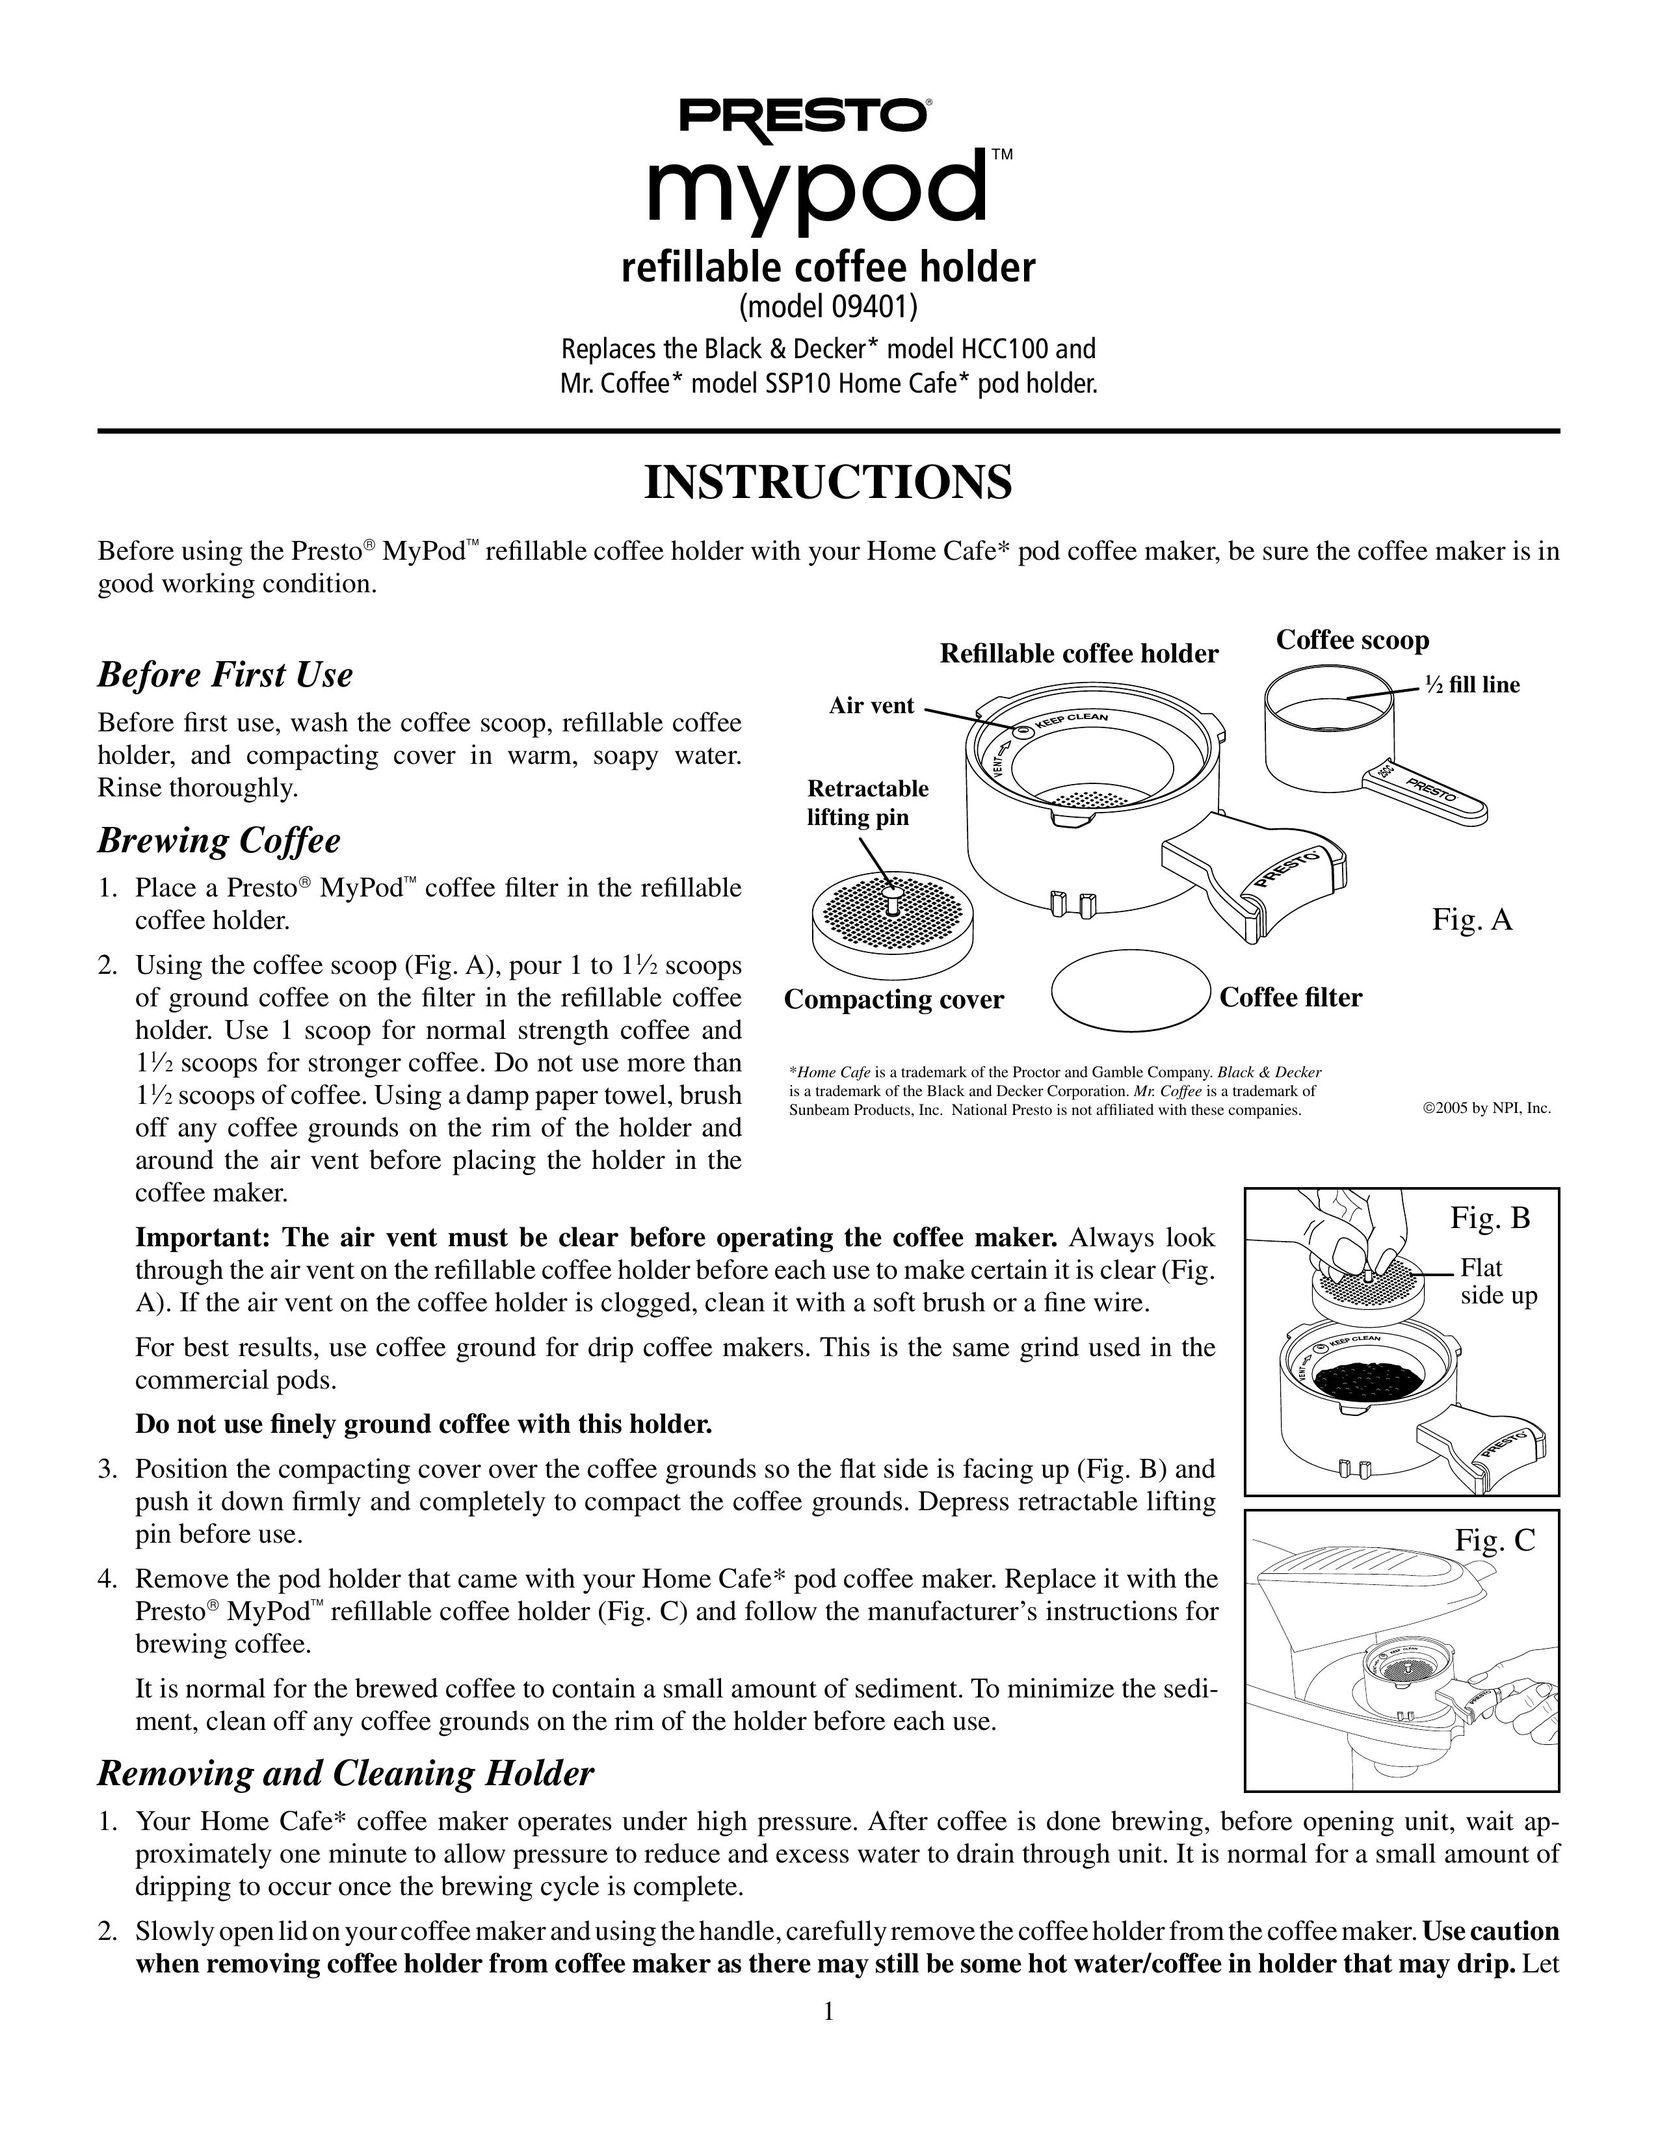 Presto 09401 Coffeemaker User Manual